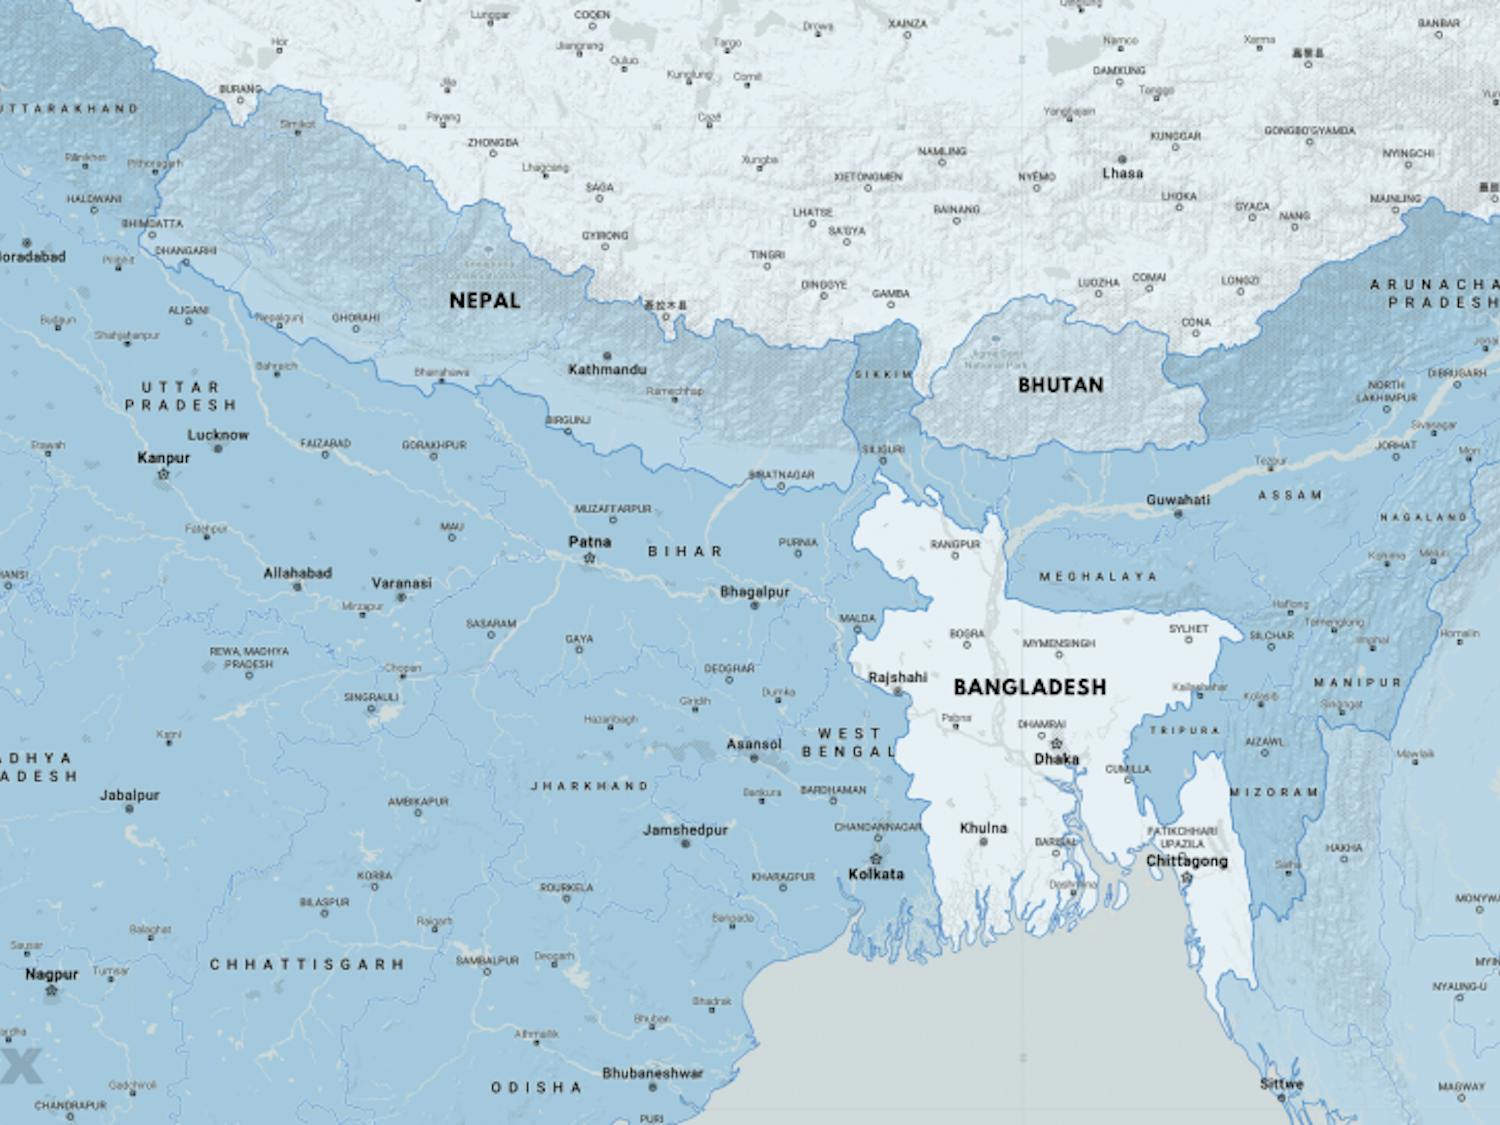 Mapbox-Bhutan and Nepal.png